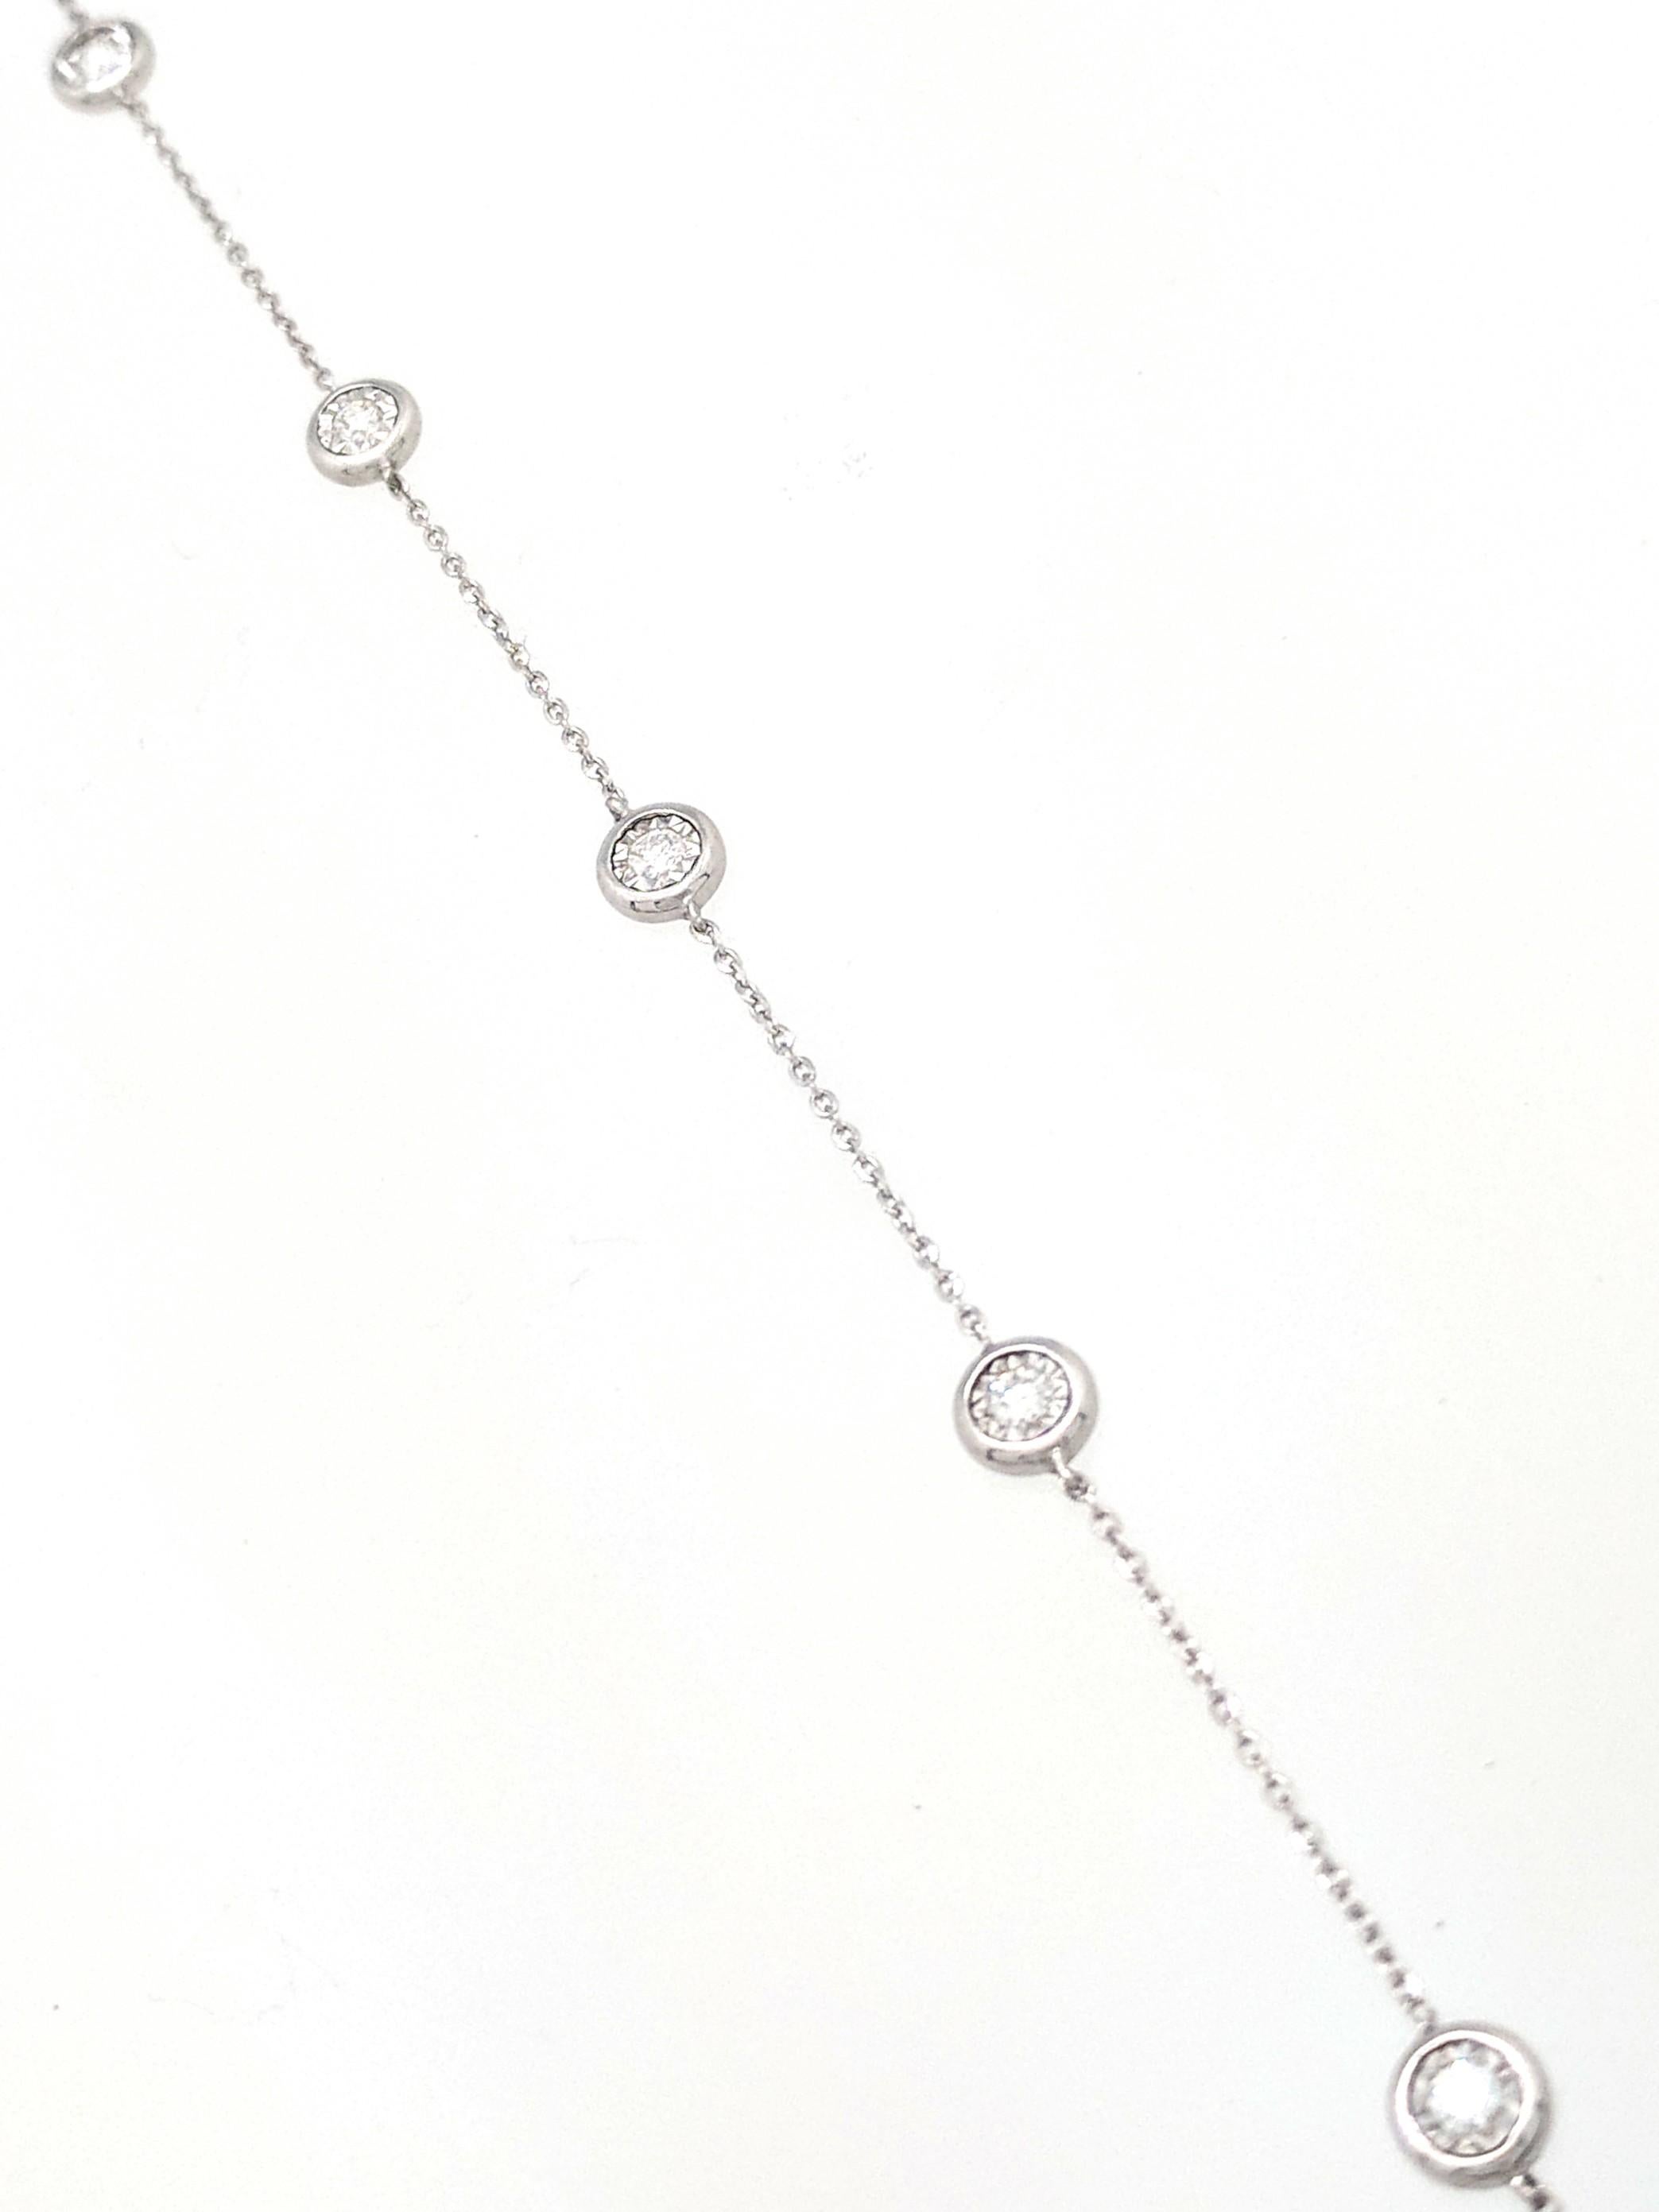 Women's 14 Karat White Gold Diamond by The Yard Necklace .93 Carat